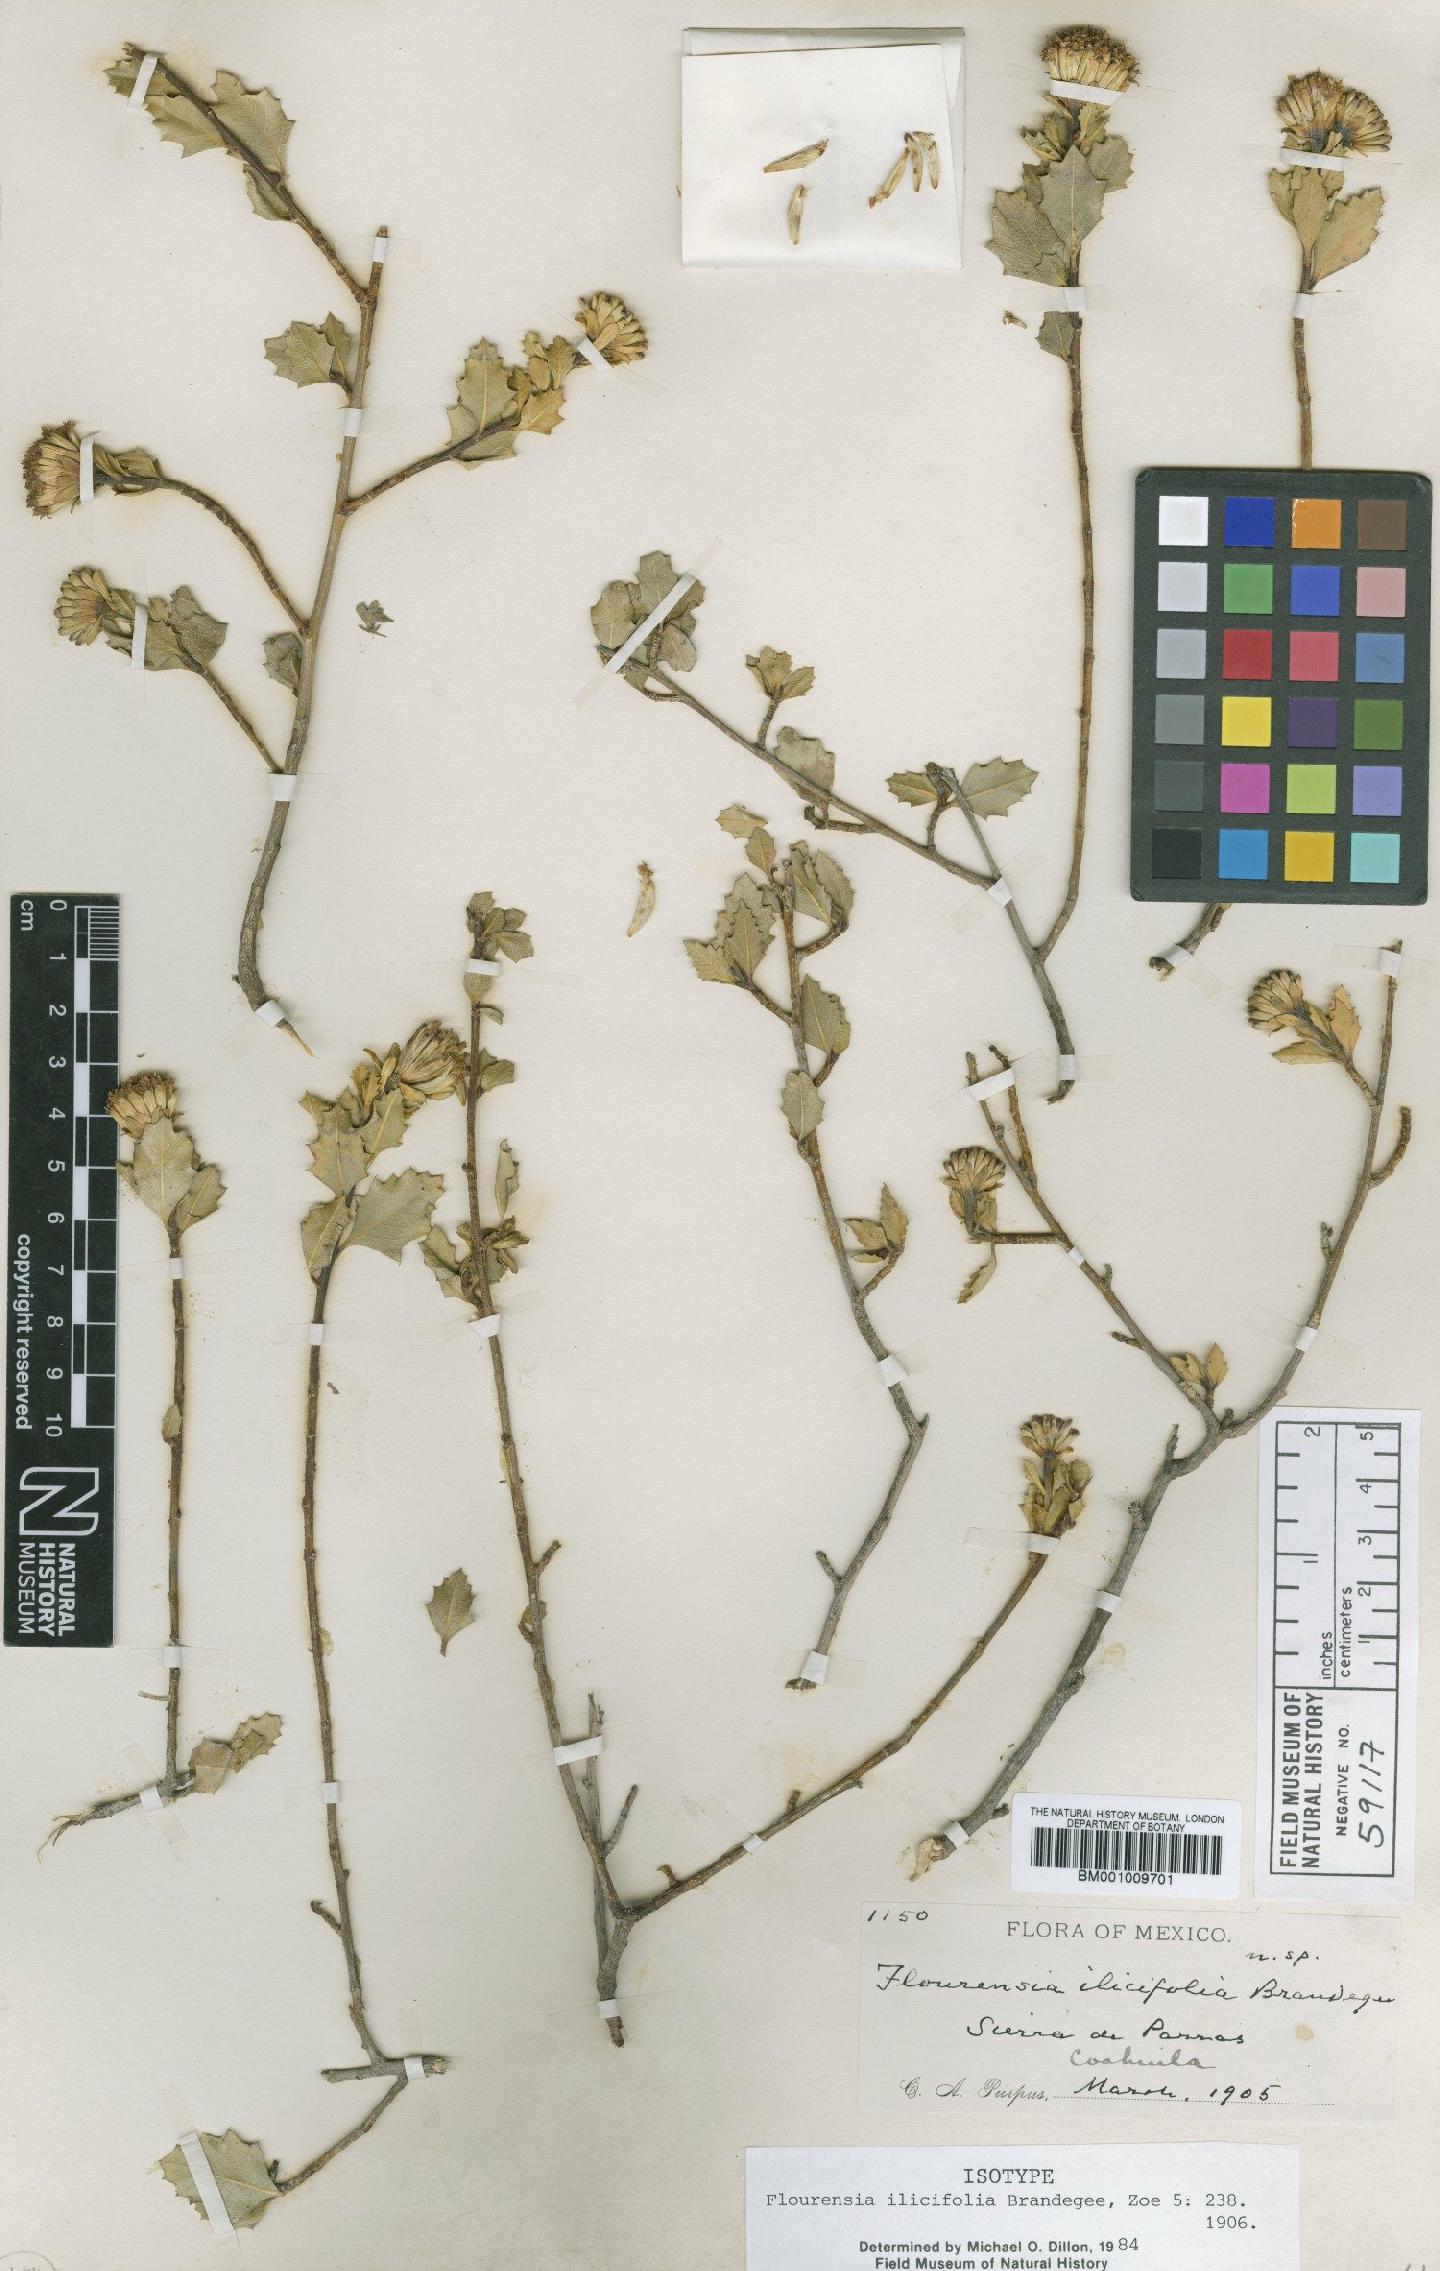 To NHMUK collection (Flourensia ilicifolia Brandegee; Isotype; NHMUK:ecatalogue:619977)